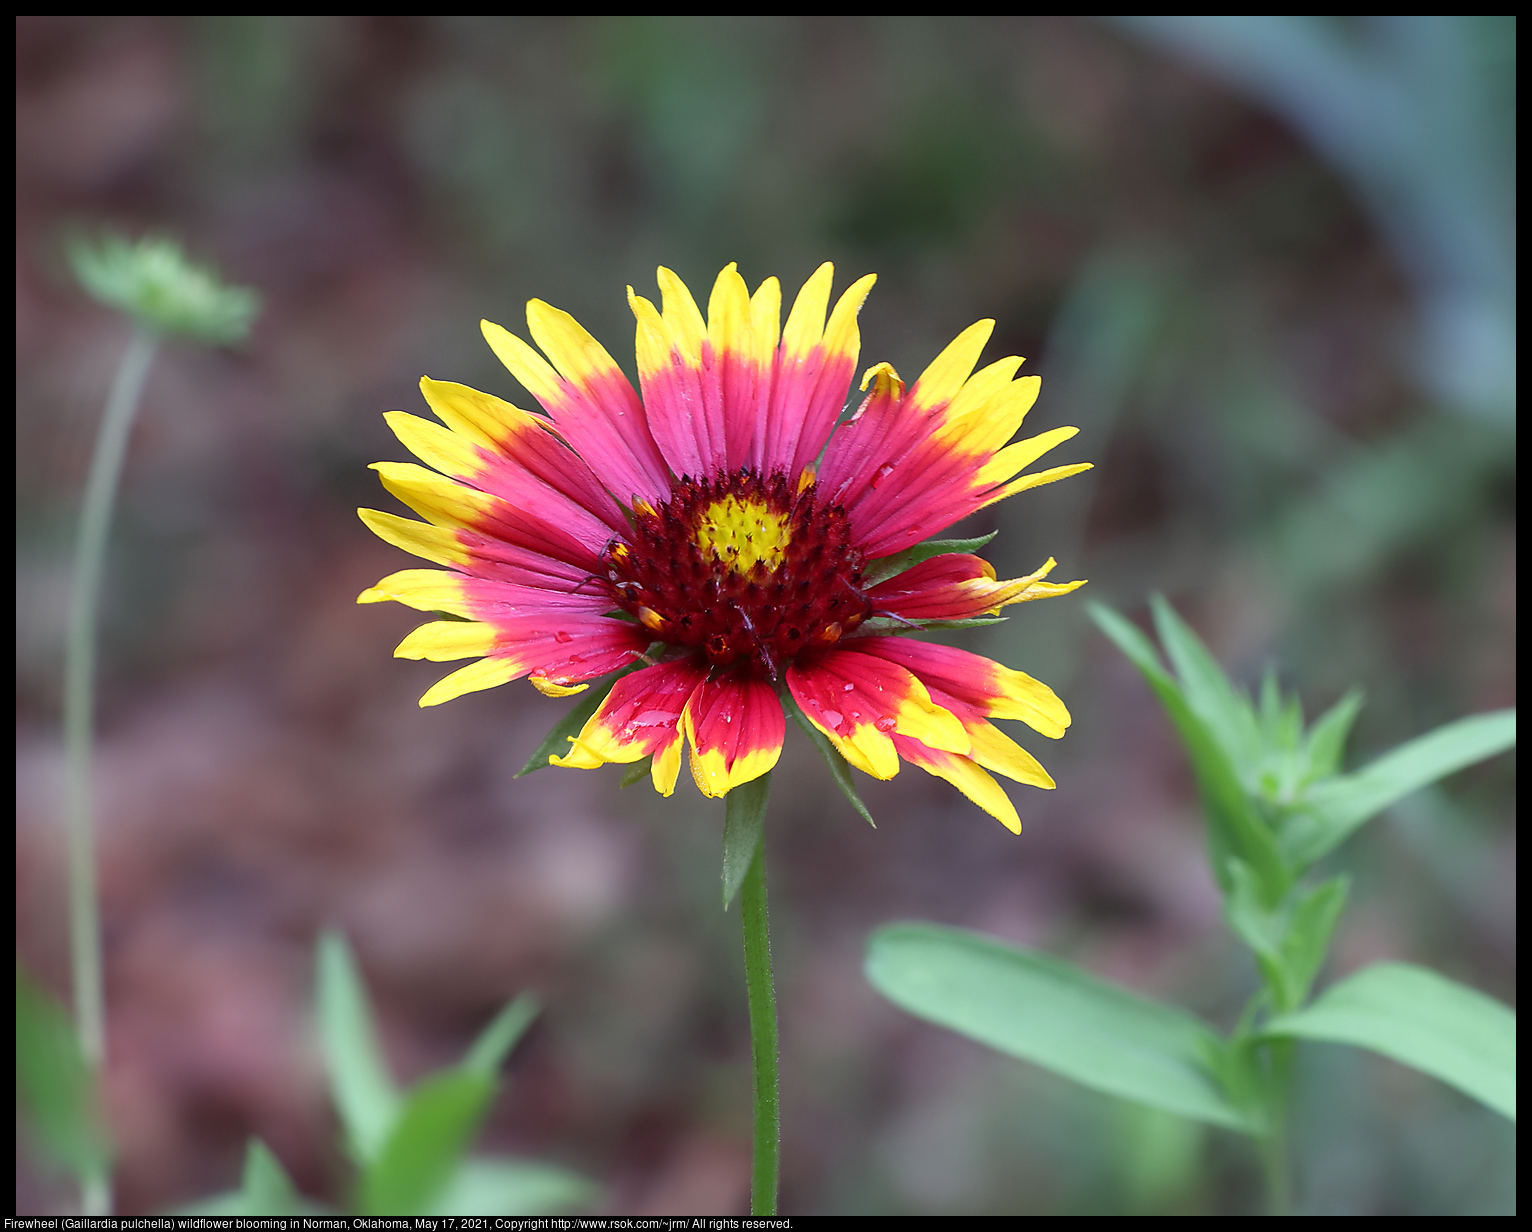 Firewheel (Gaillardia pulchella) wildflower blooming in Norman, Oklahoma, May 17, 2021